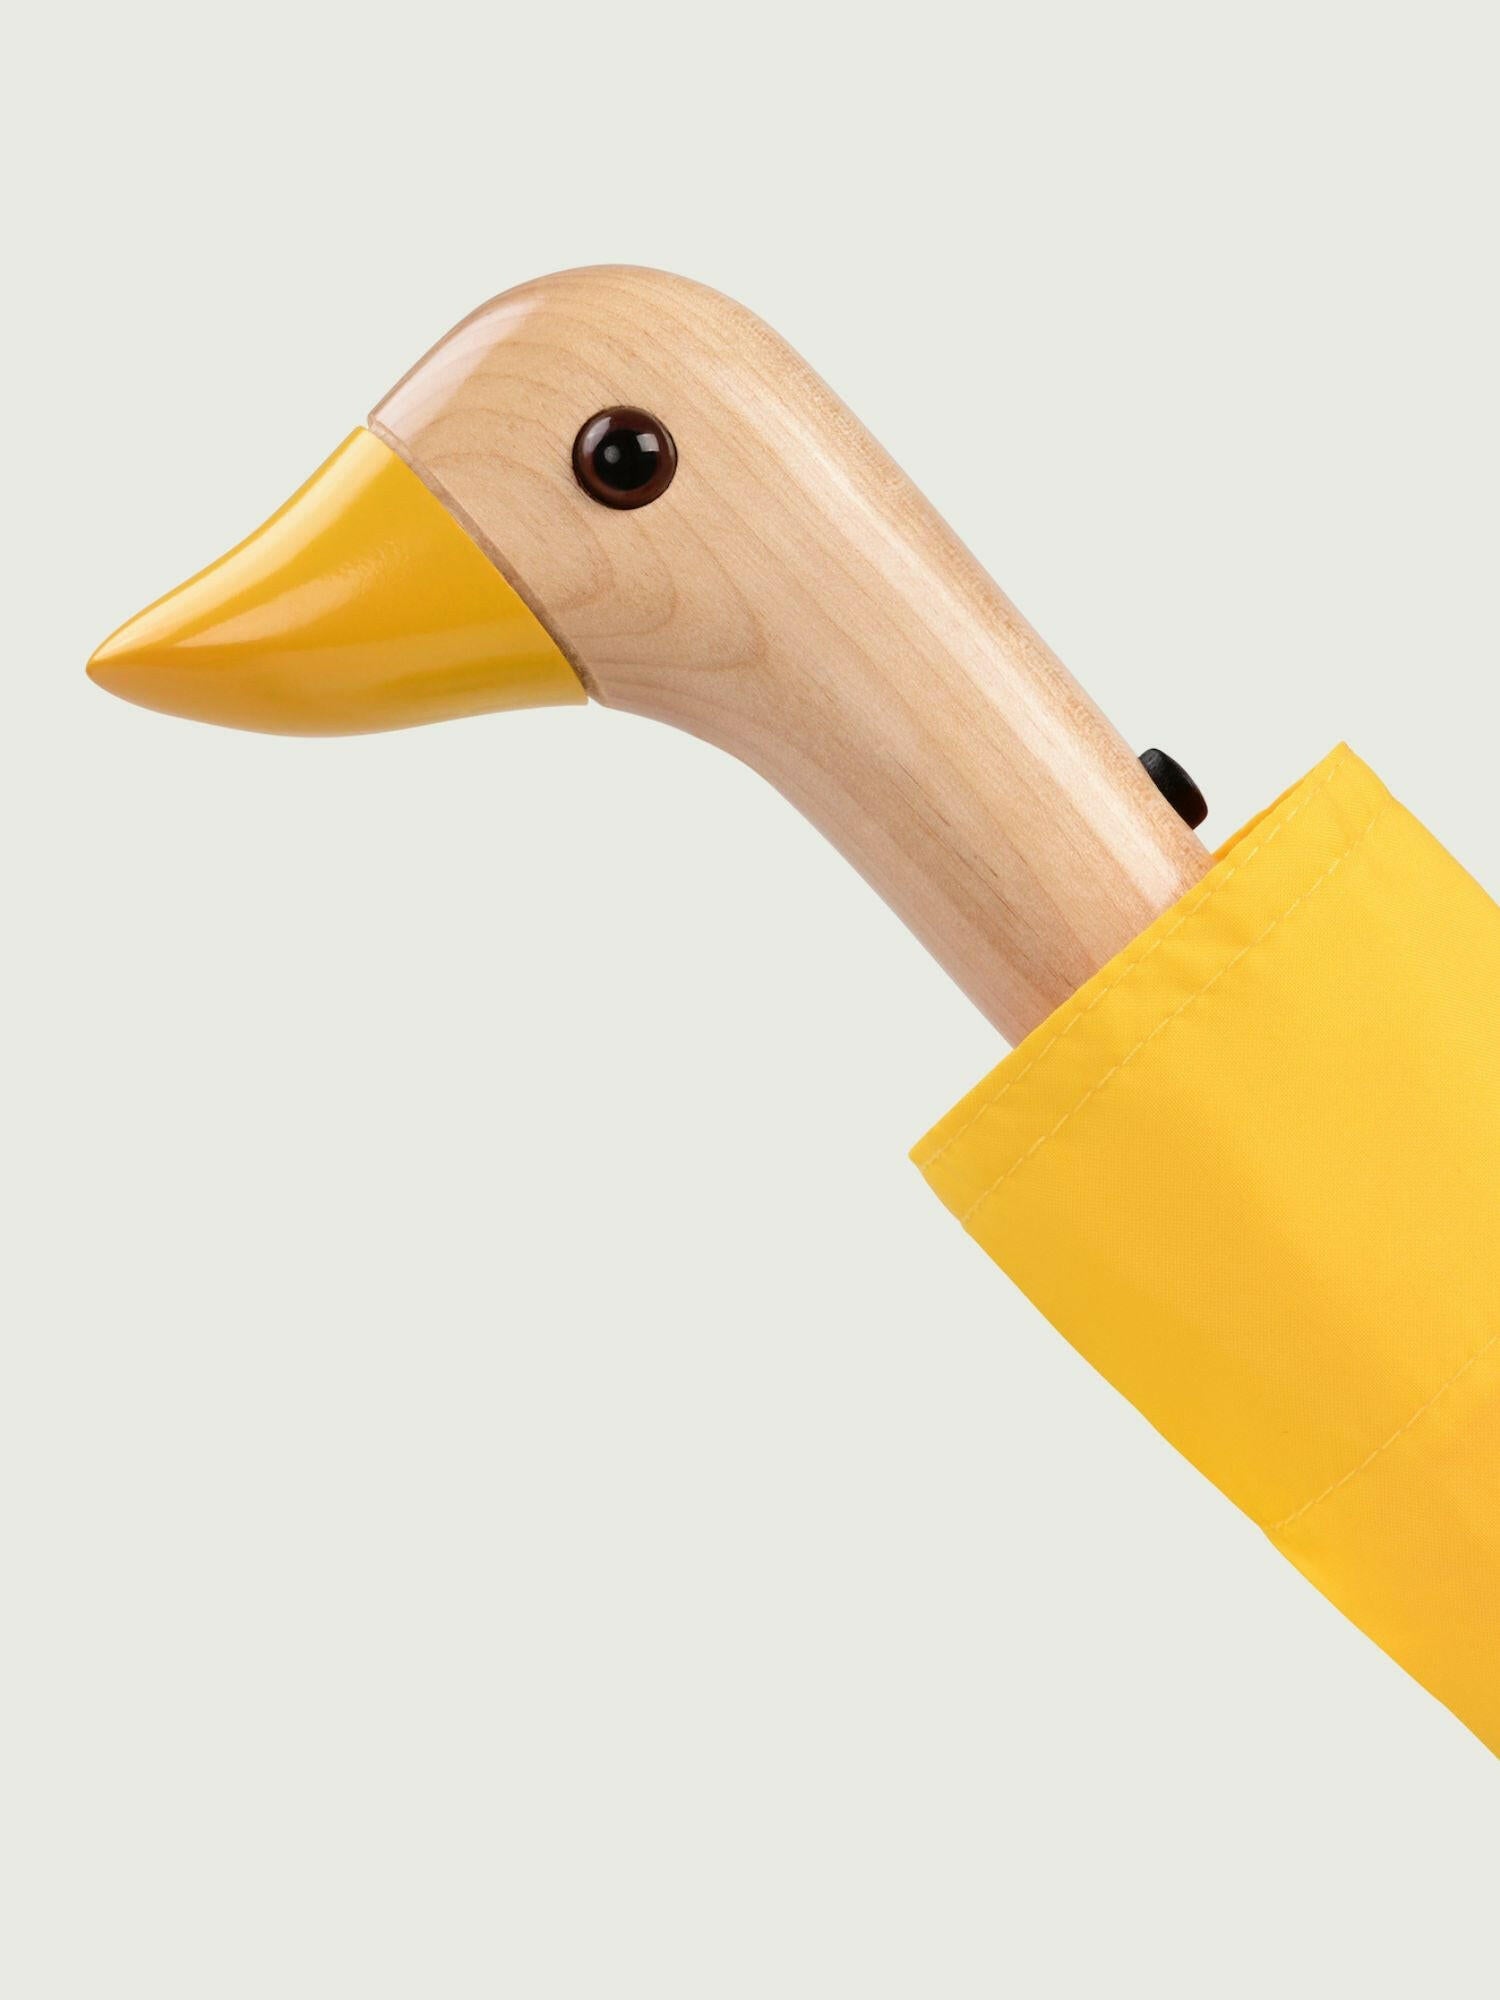 Yellow Duck Compact Umbrella.